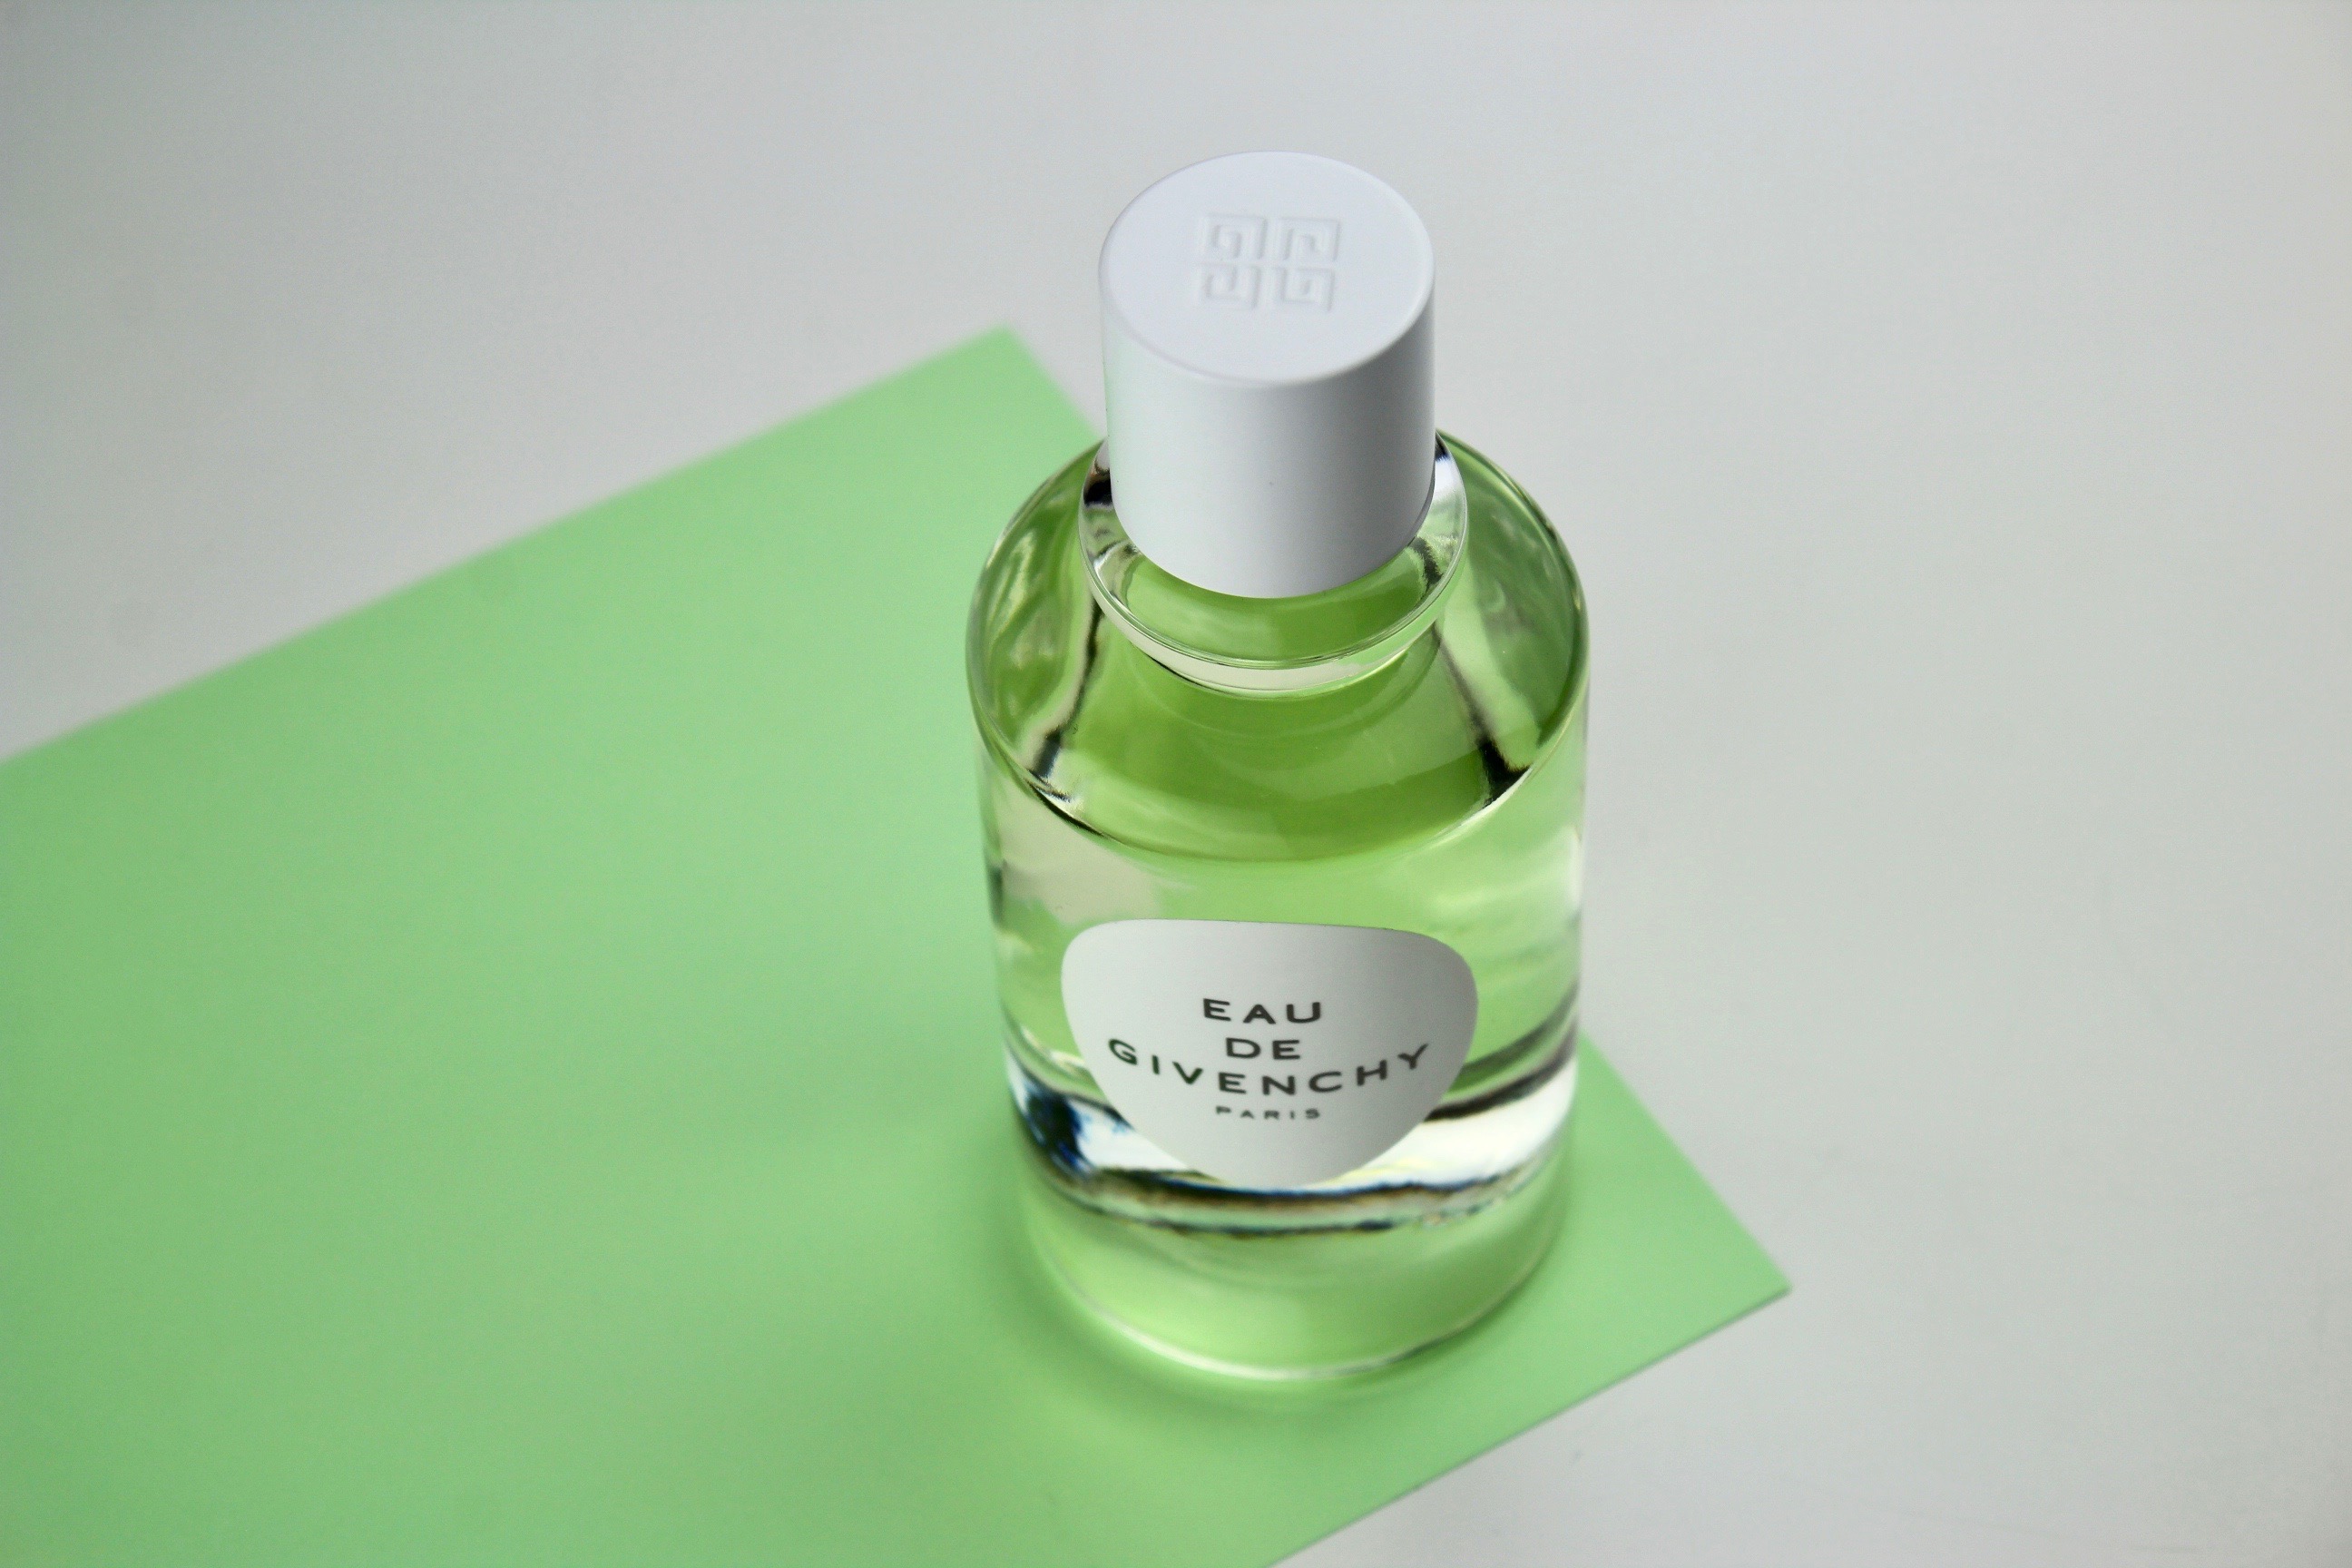 givenchy green perfume